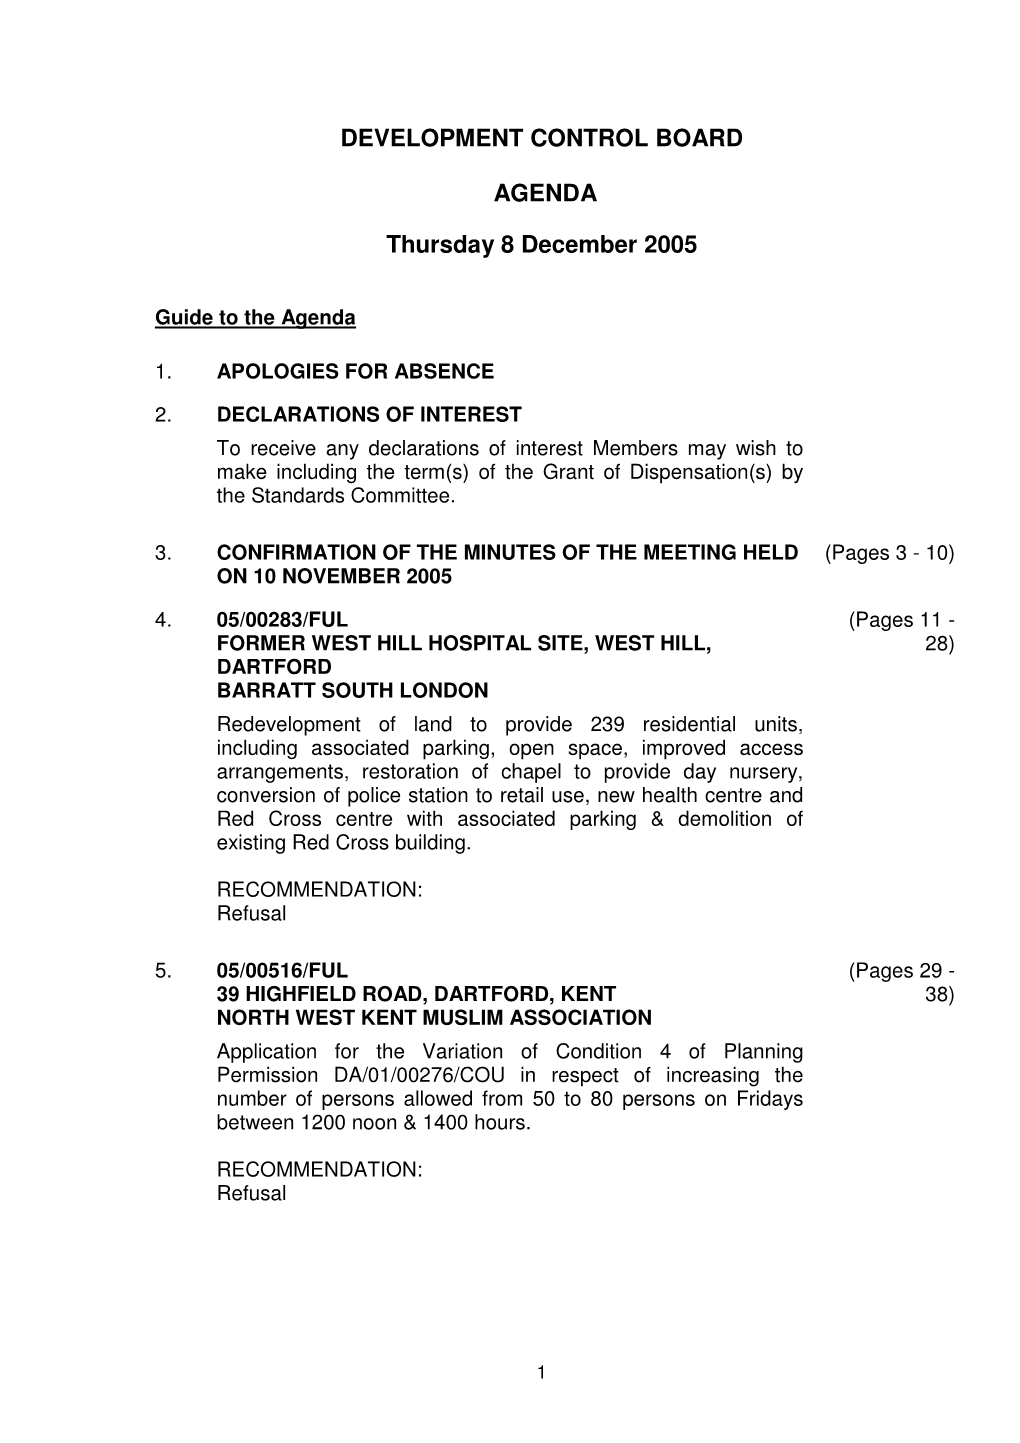 DEVELOPMENT CONTROL BOARD AGENDA Thursday 8 December 2005